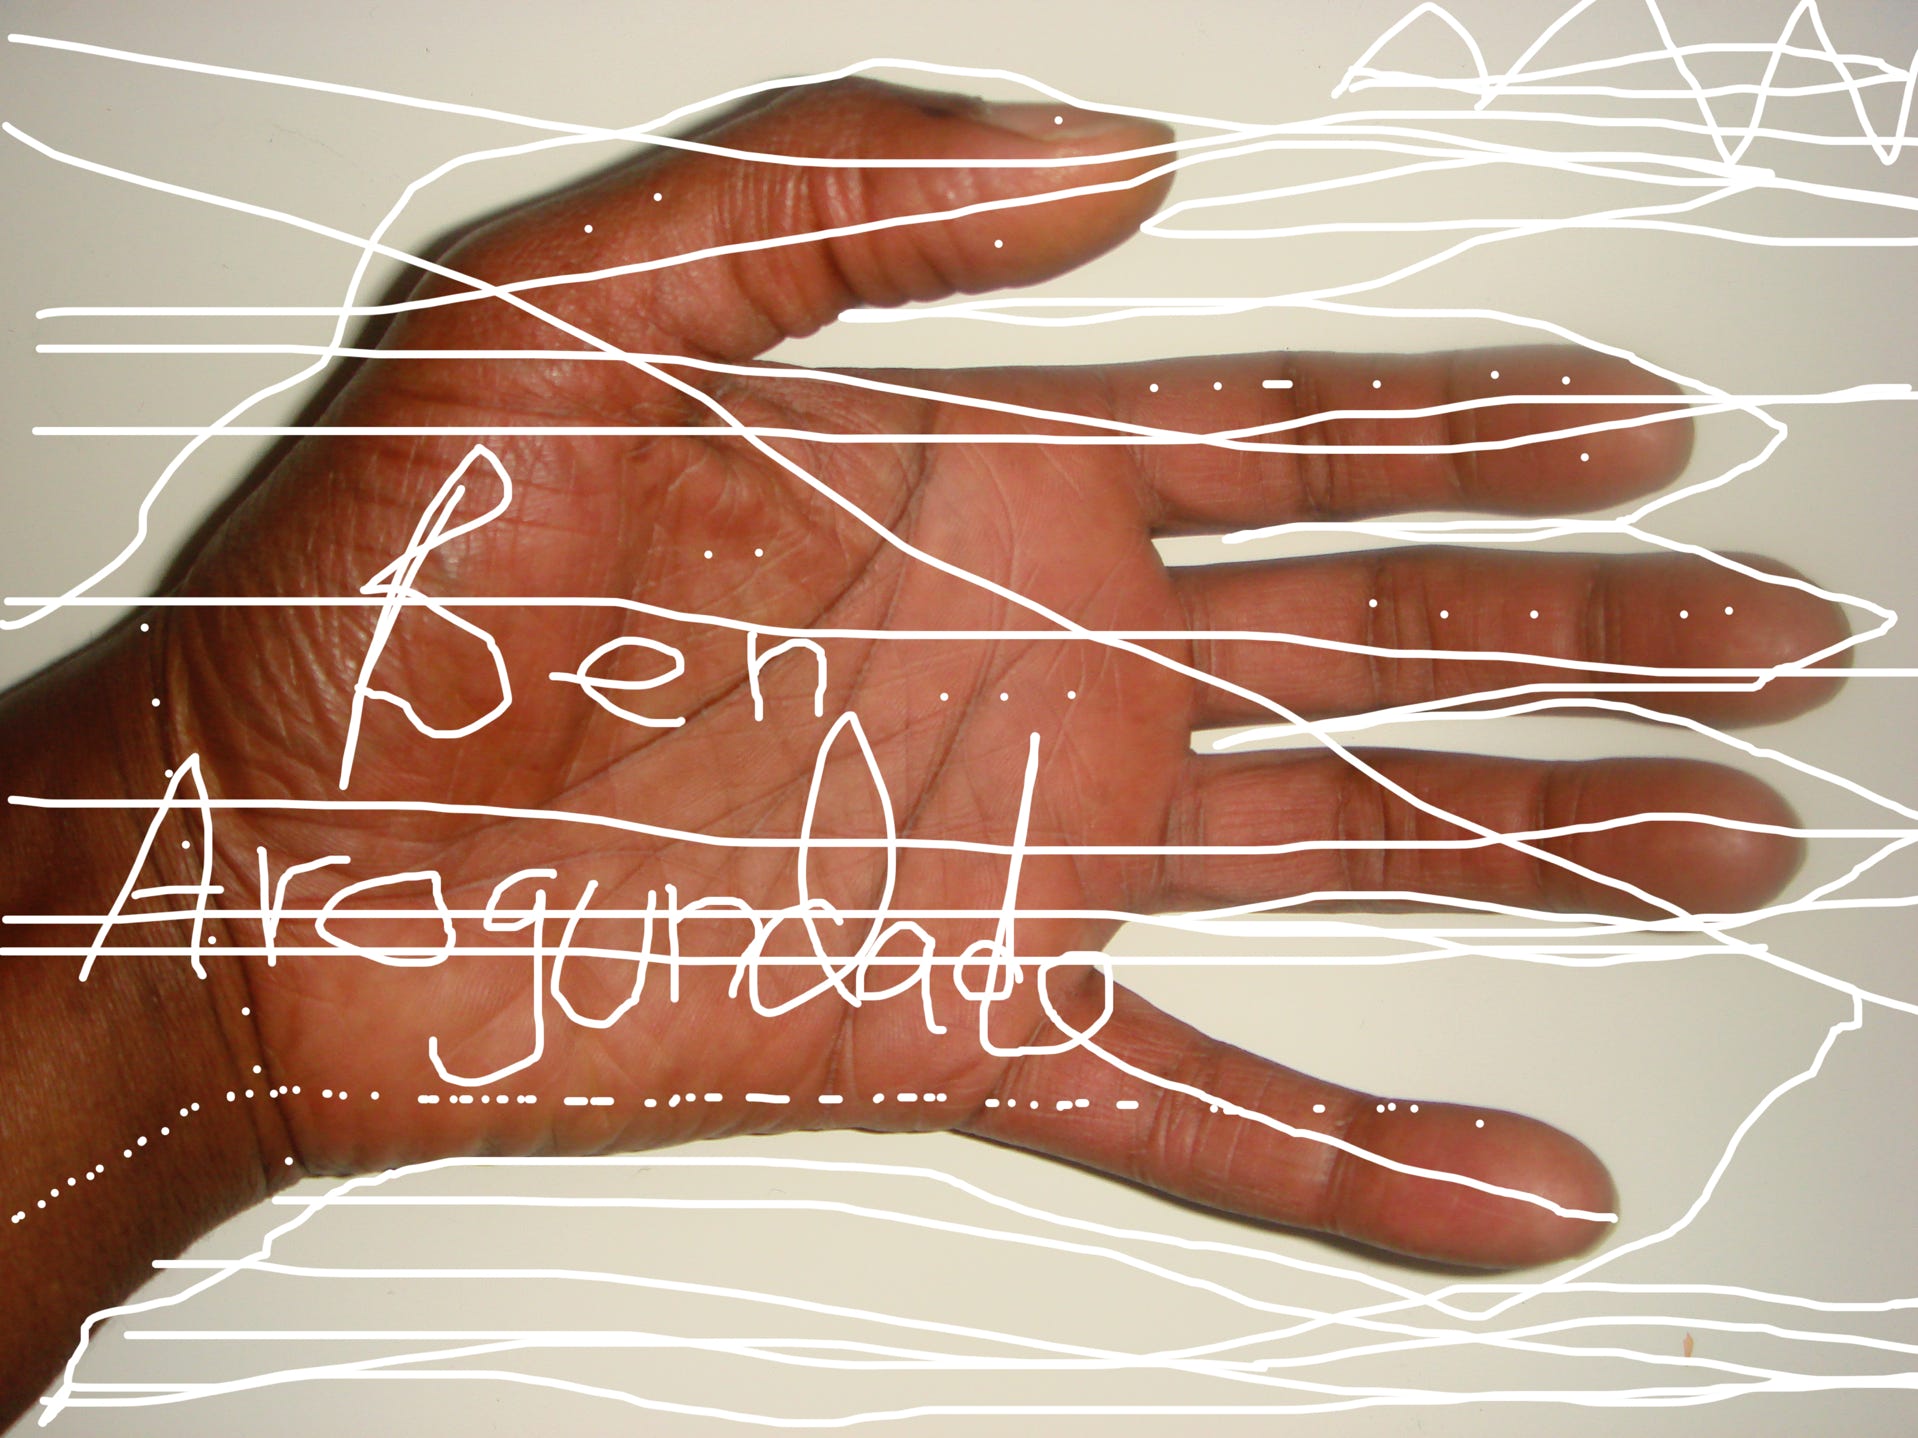 Creative art graphic signature for author writer Ben Arogundade website